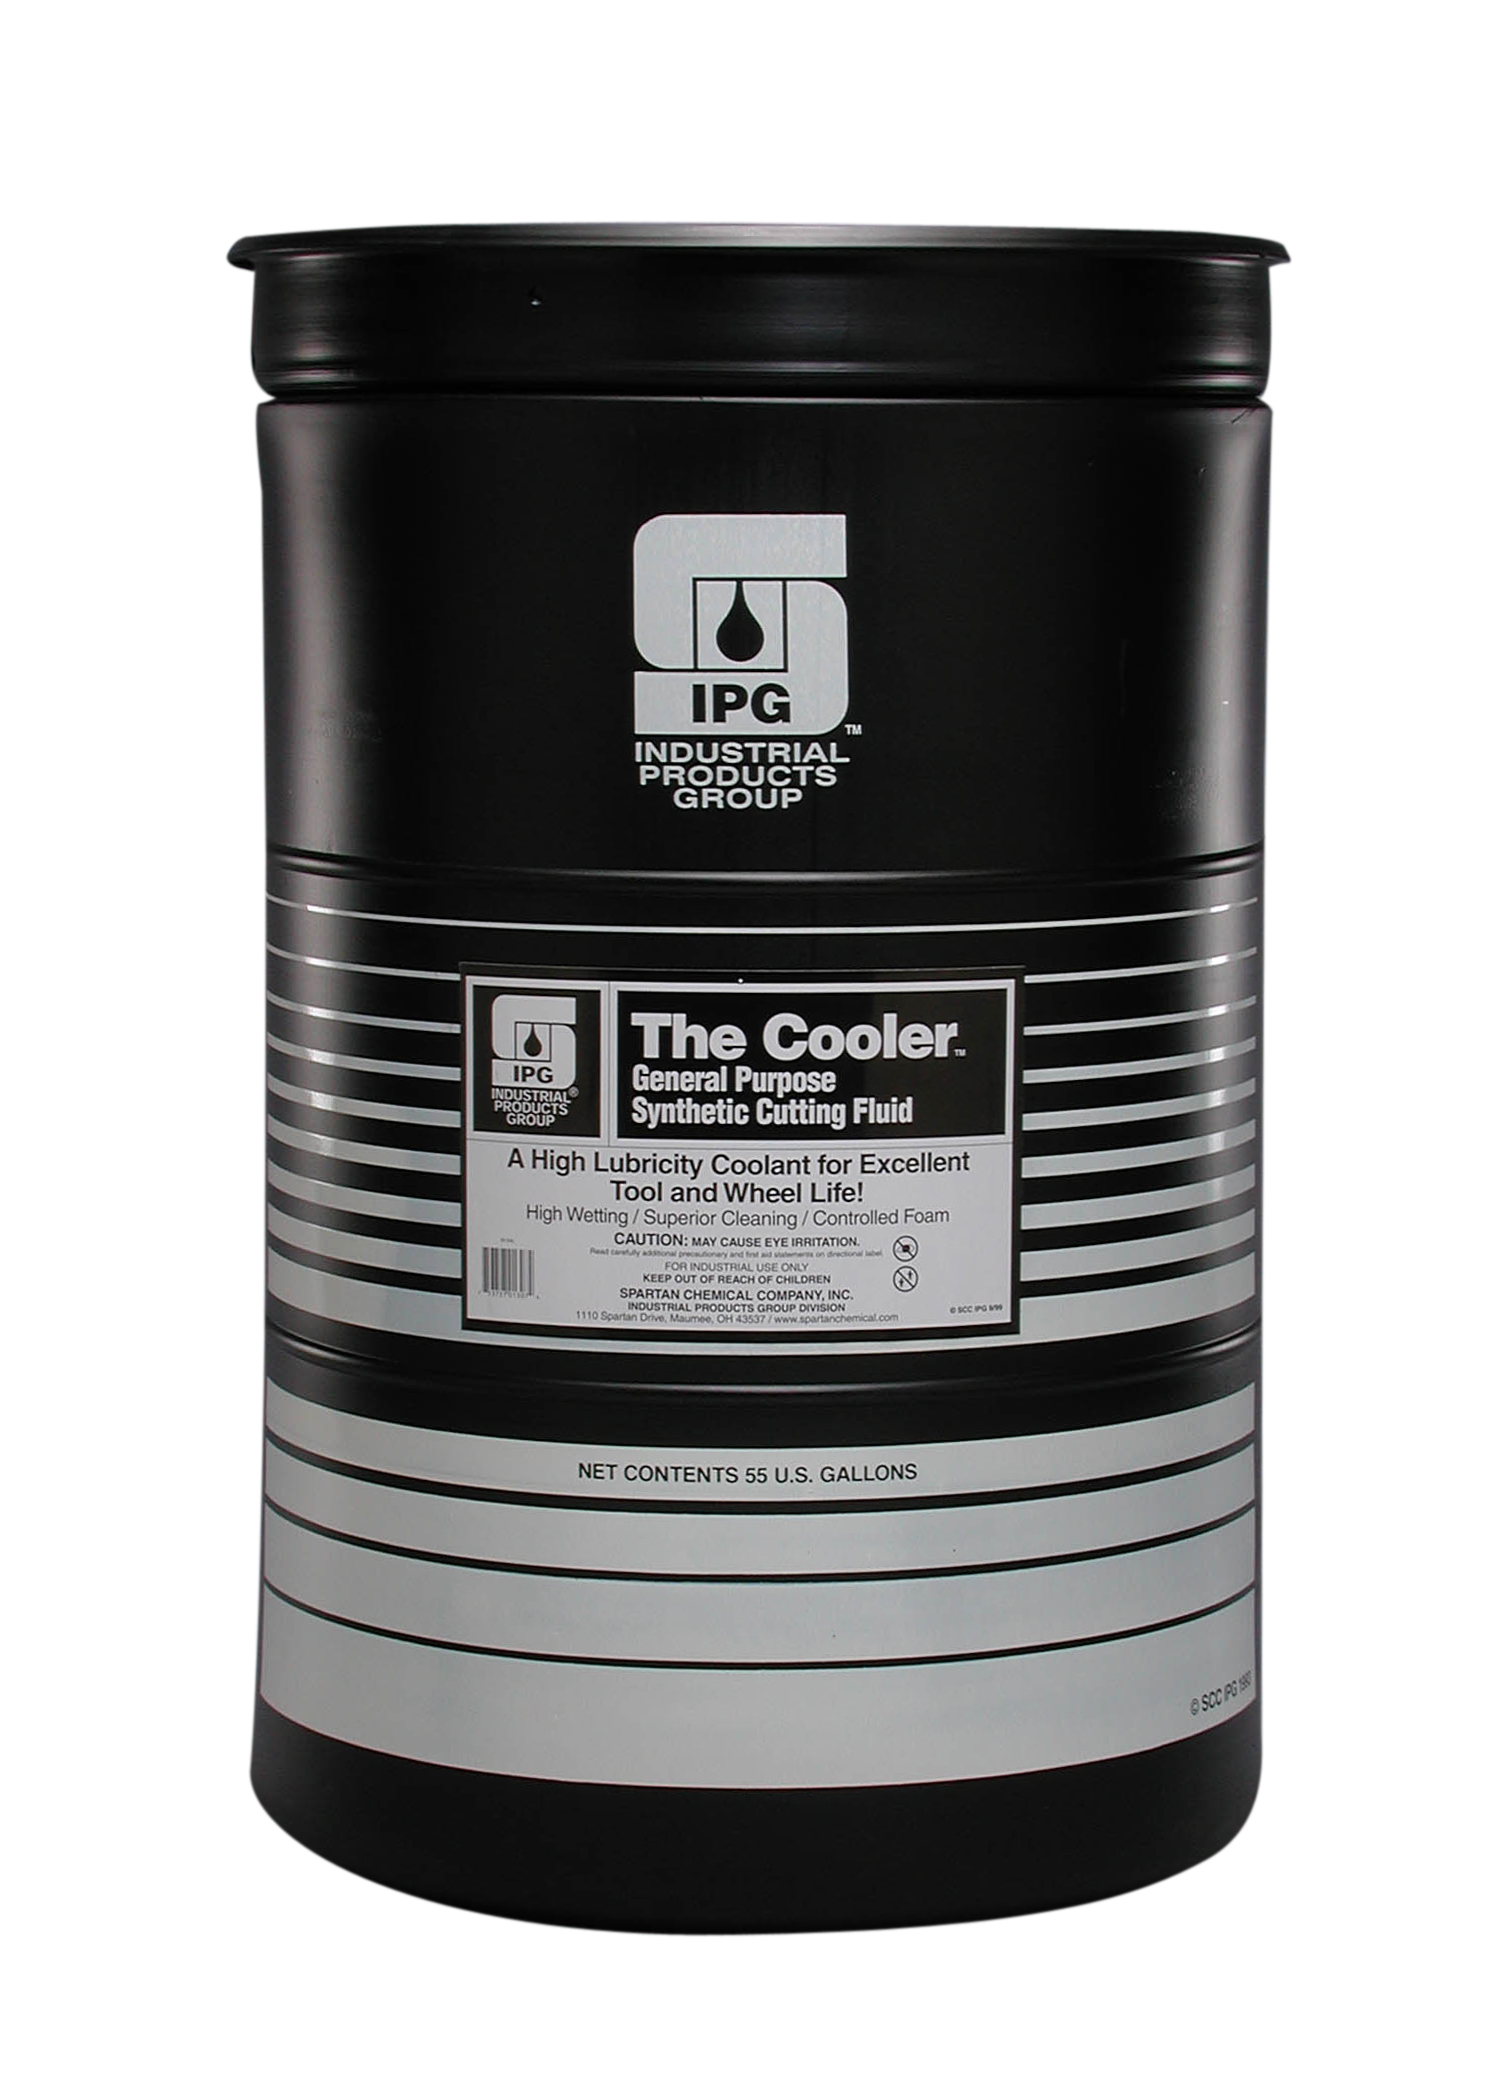 The Cooler 55 gallon drum